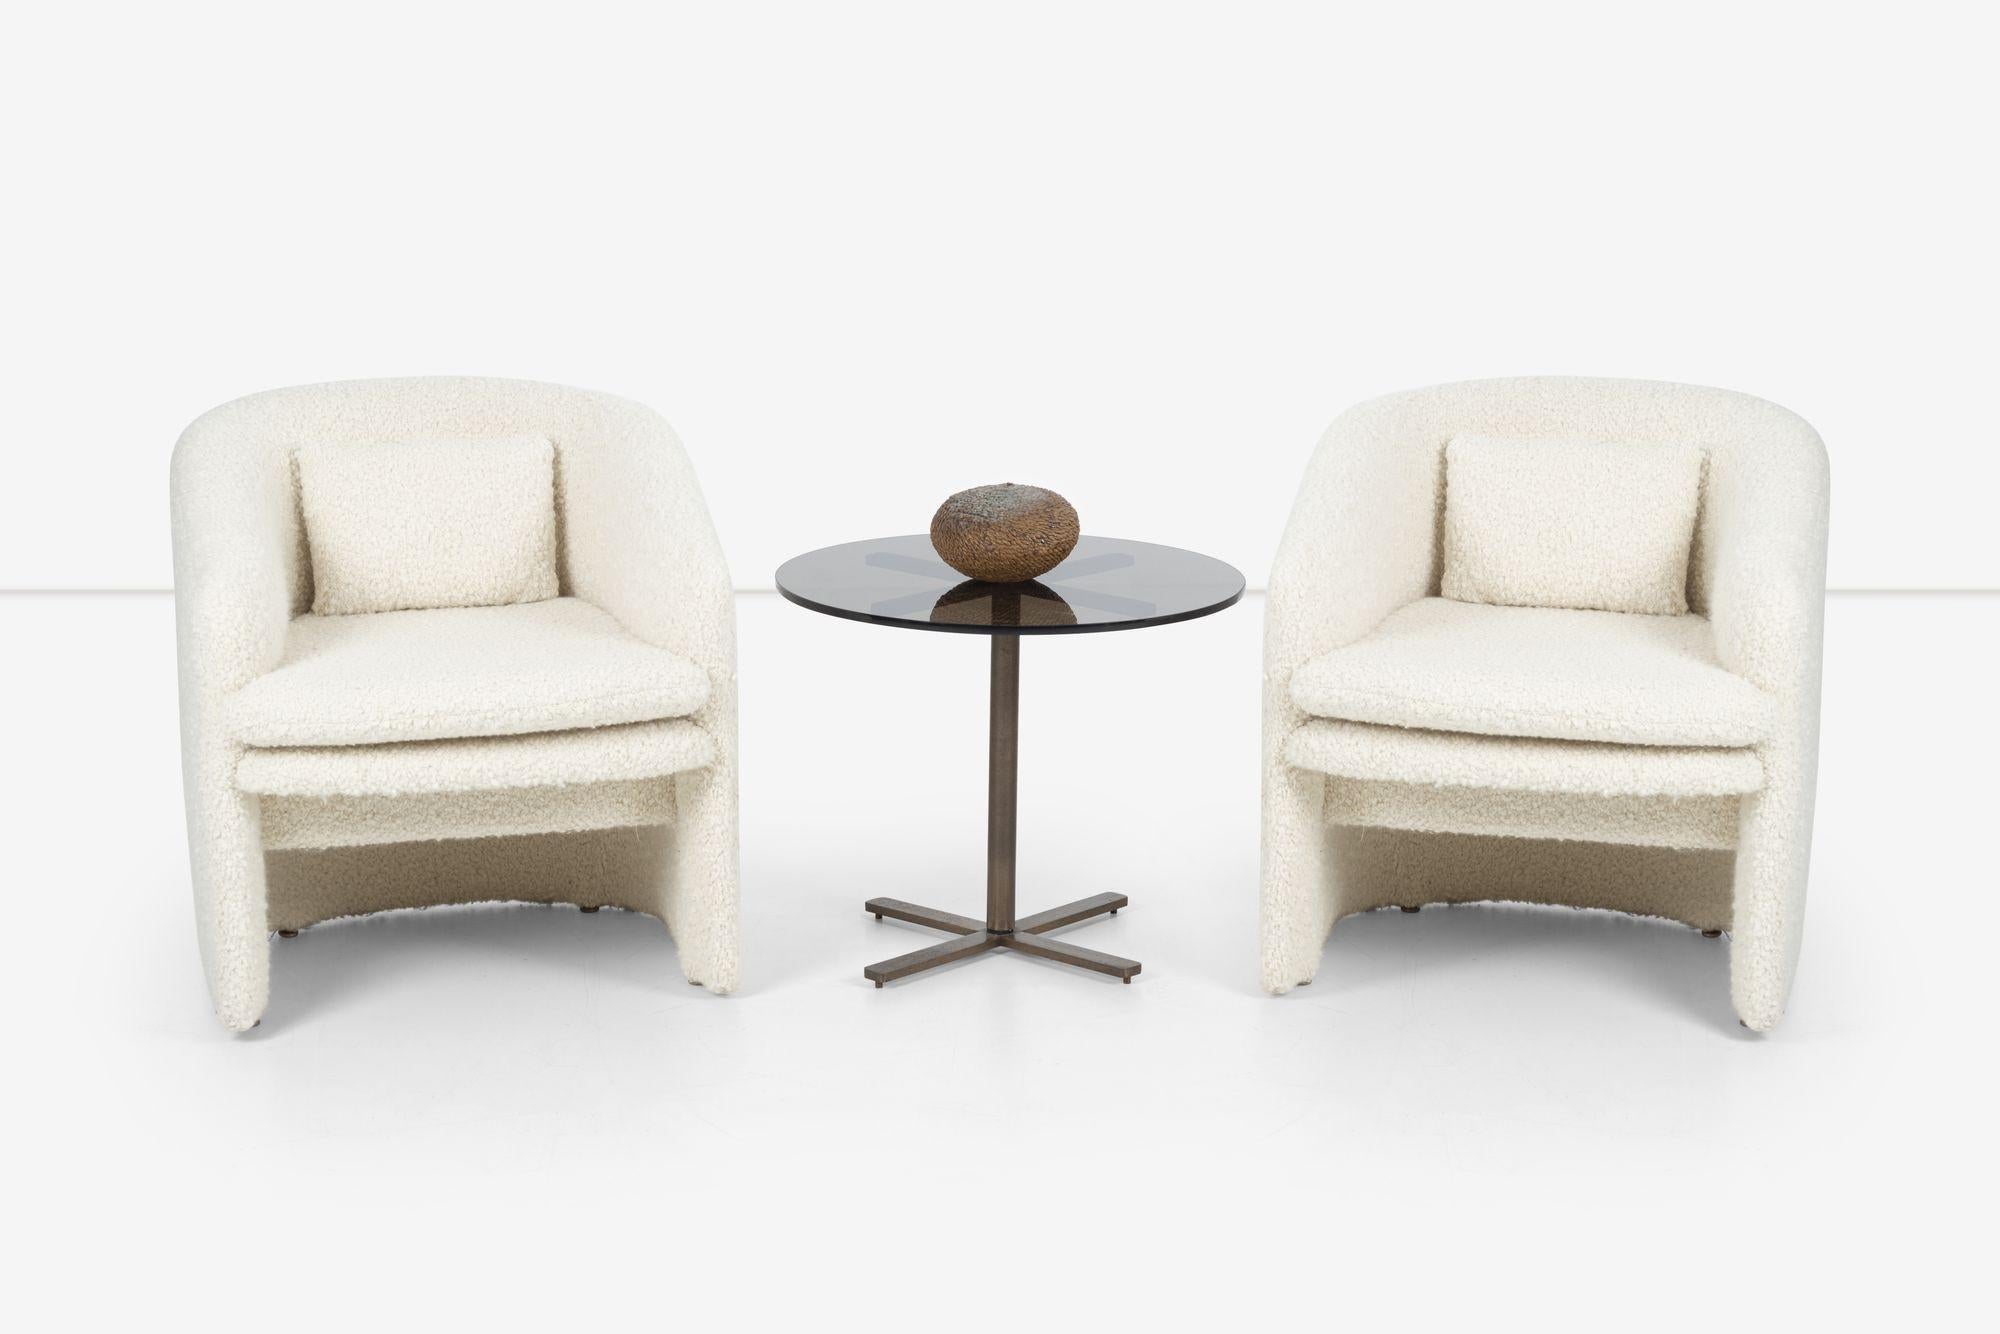 Paar Milo Baughman Style Lounge Chairs, neu gepolstert in Alpaka.
Hergestellt in Italien
Abmessungen:
29